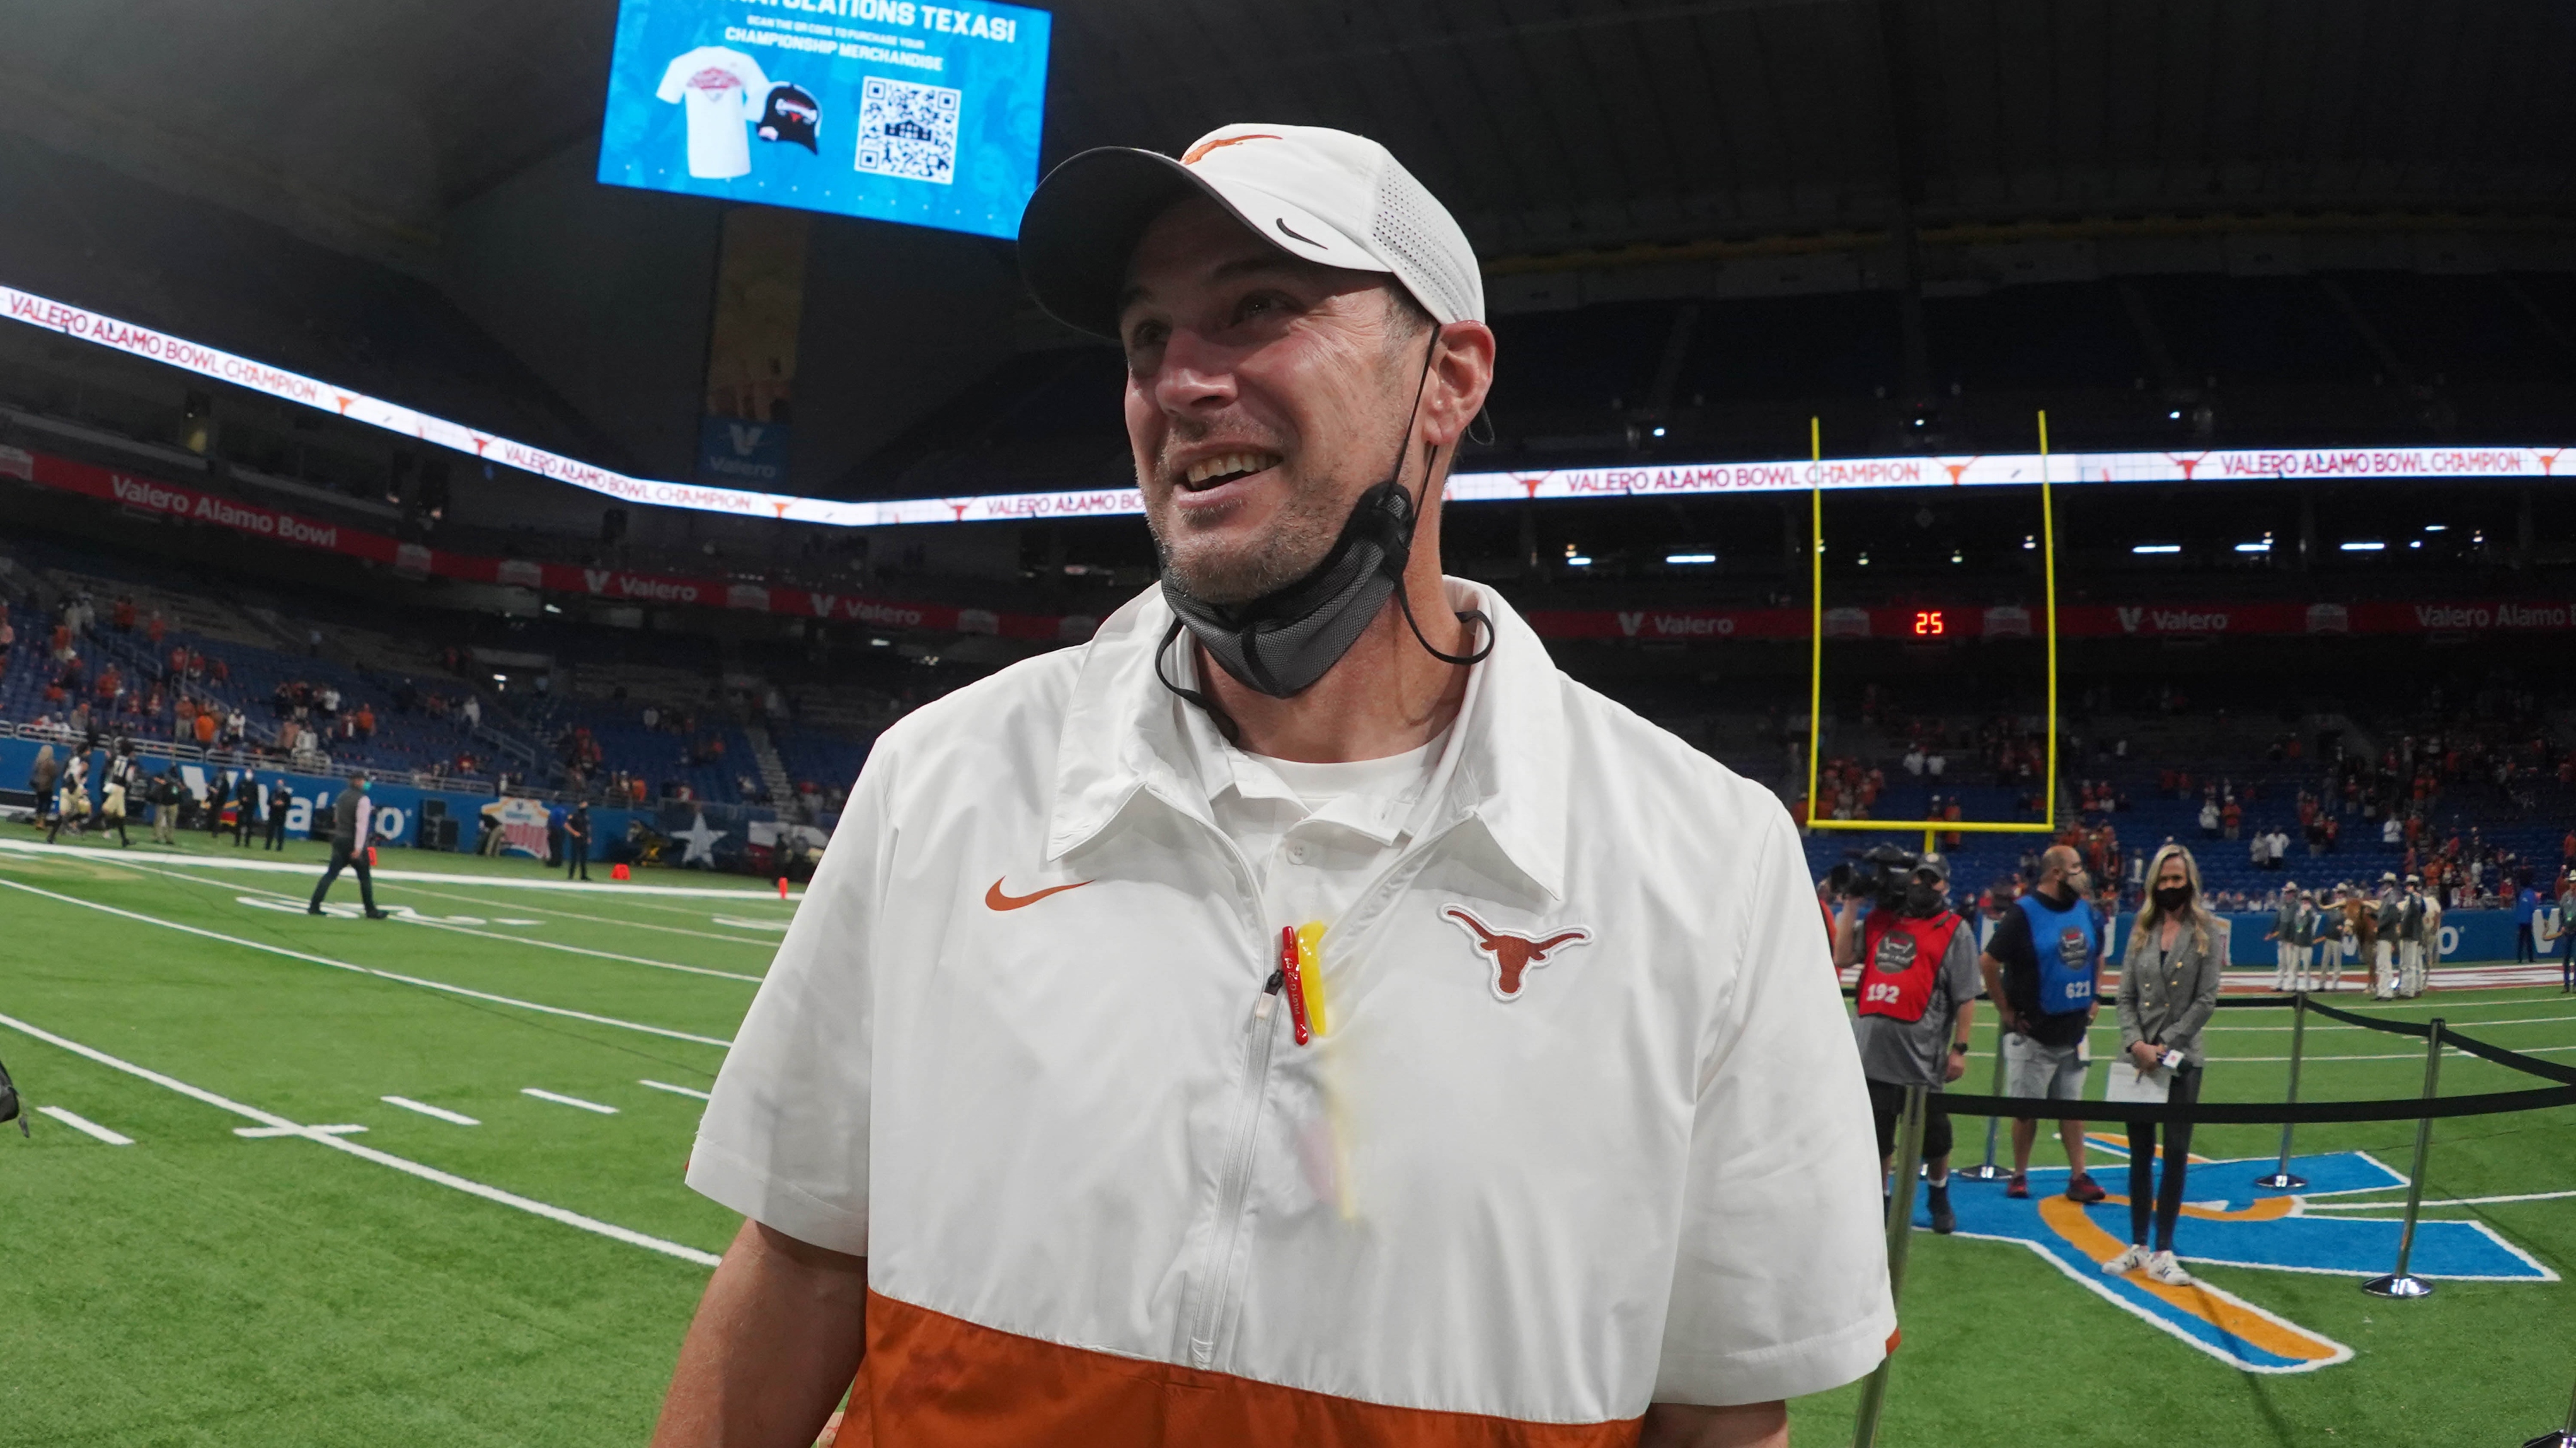 FAU Football Hires Former Texas Coach Tom Herman, per Report thumbnail